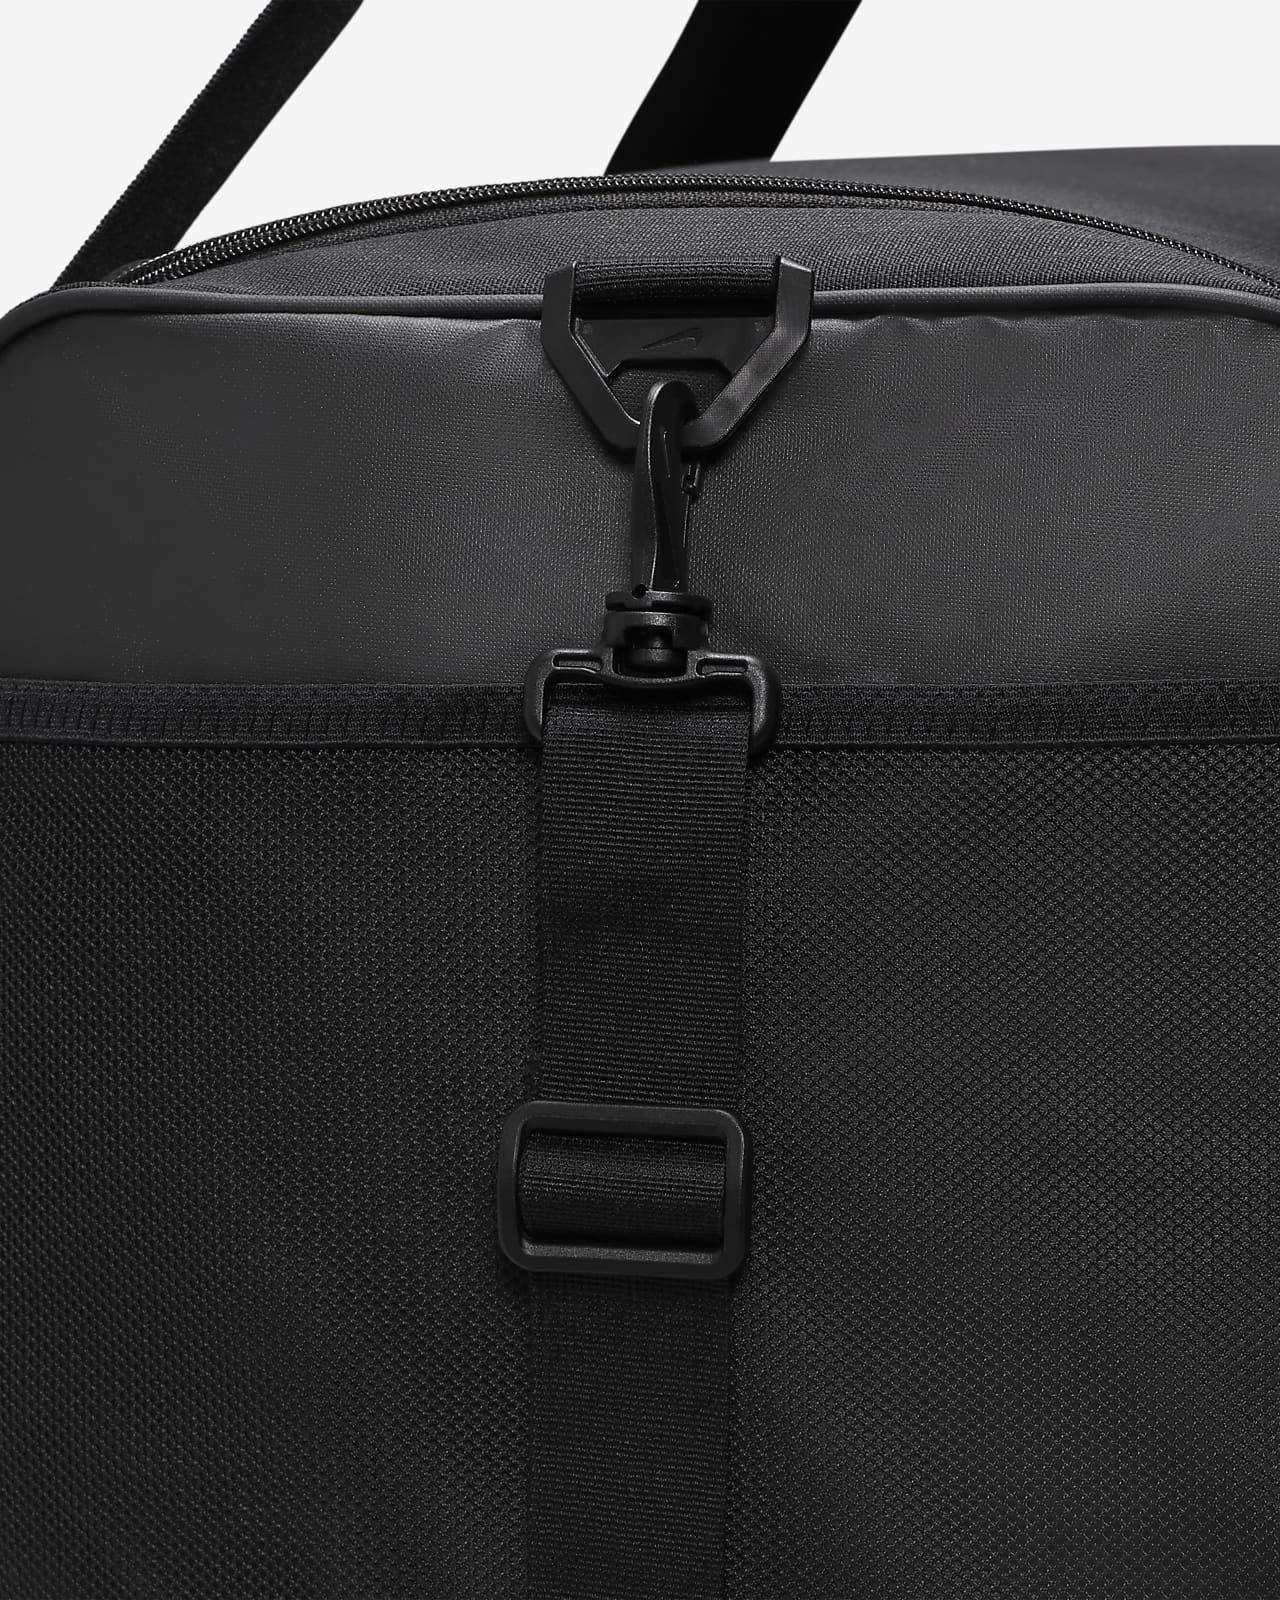 Nike Training Brasilia 9.5 small Swoosh printed holdall bag in black